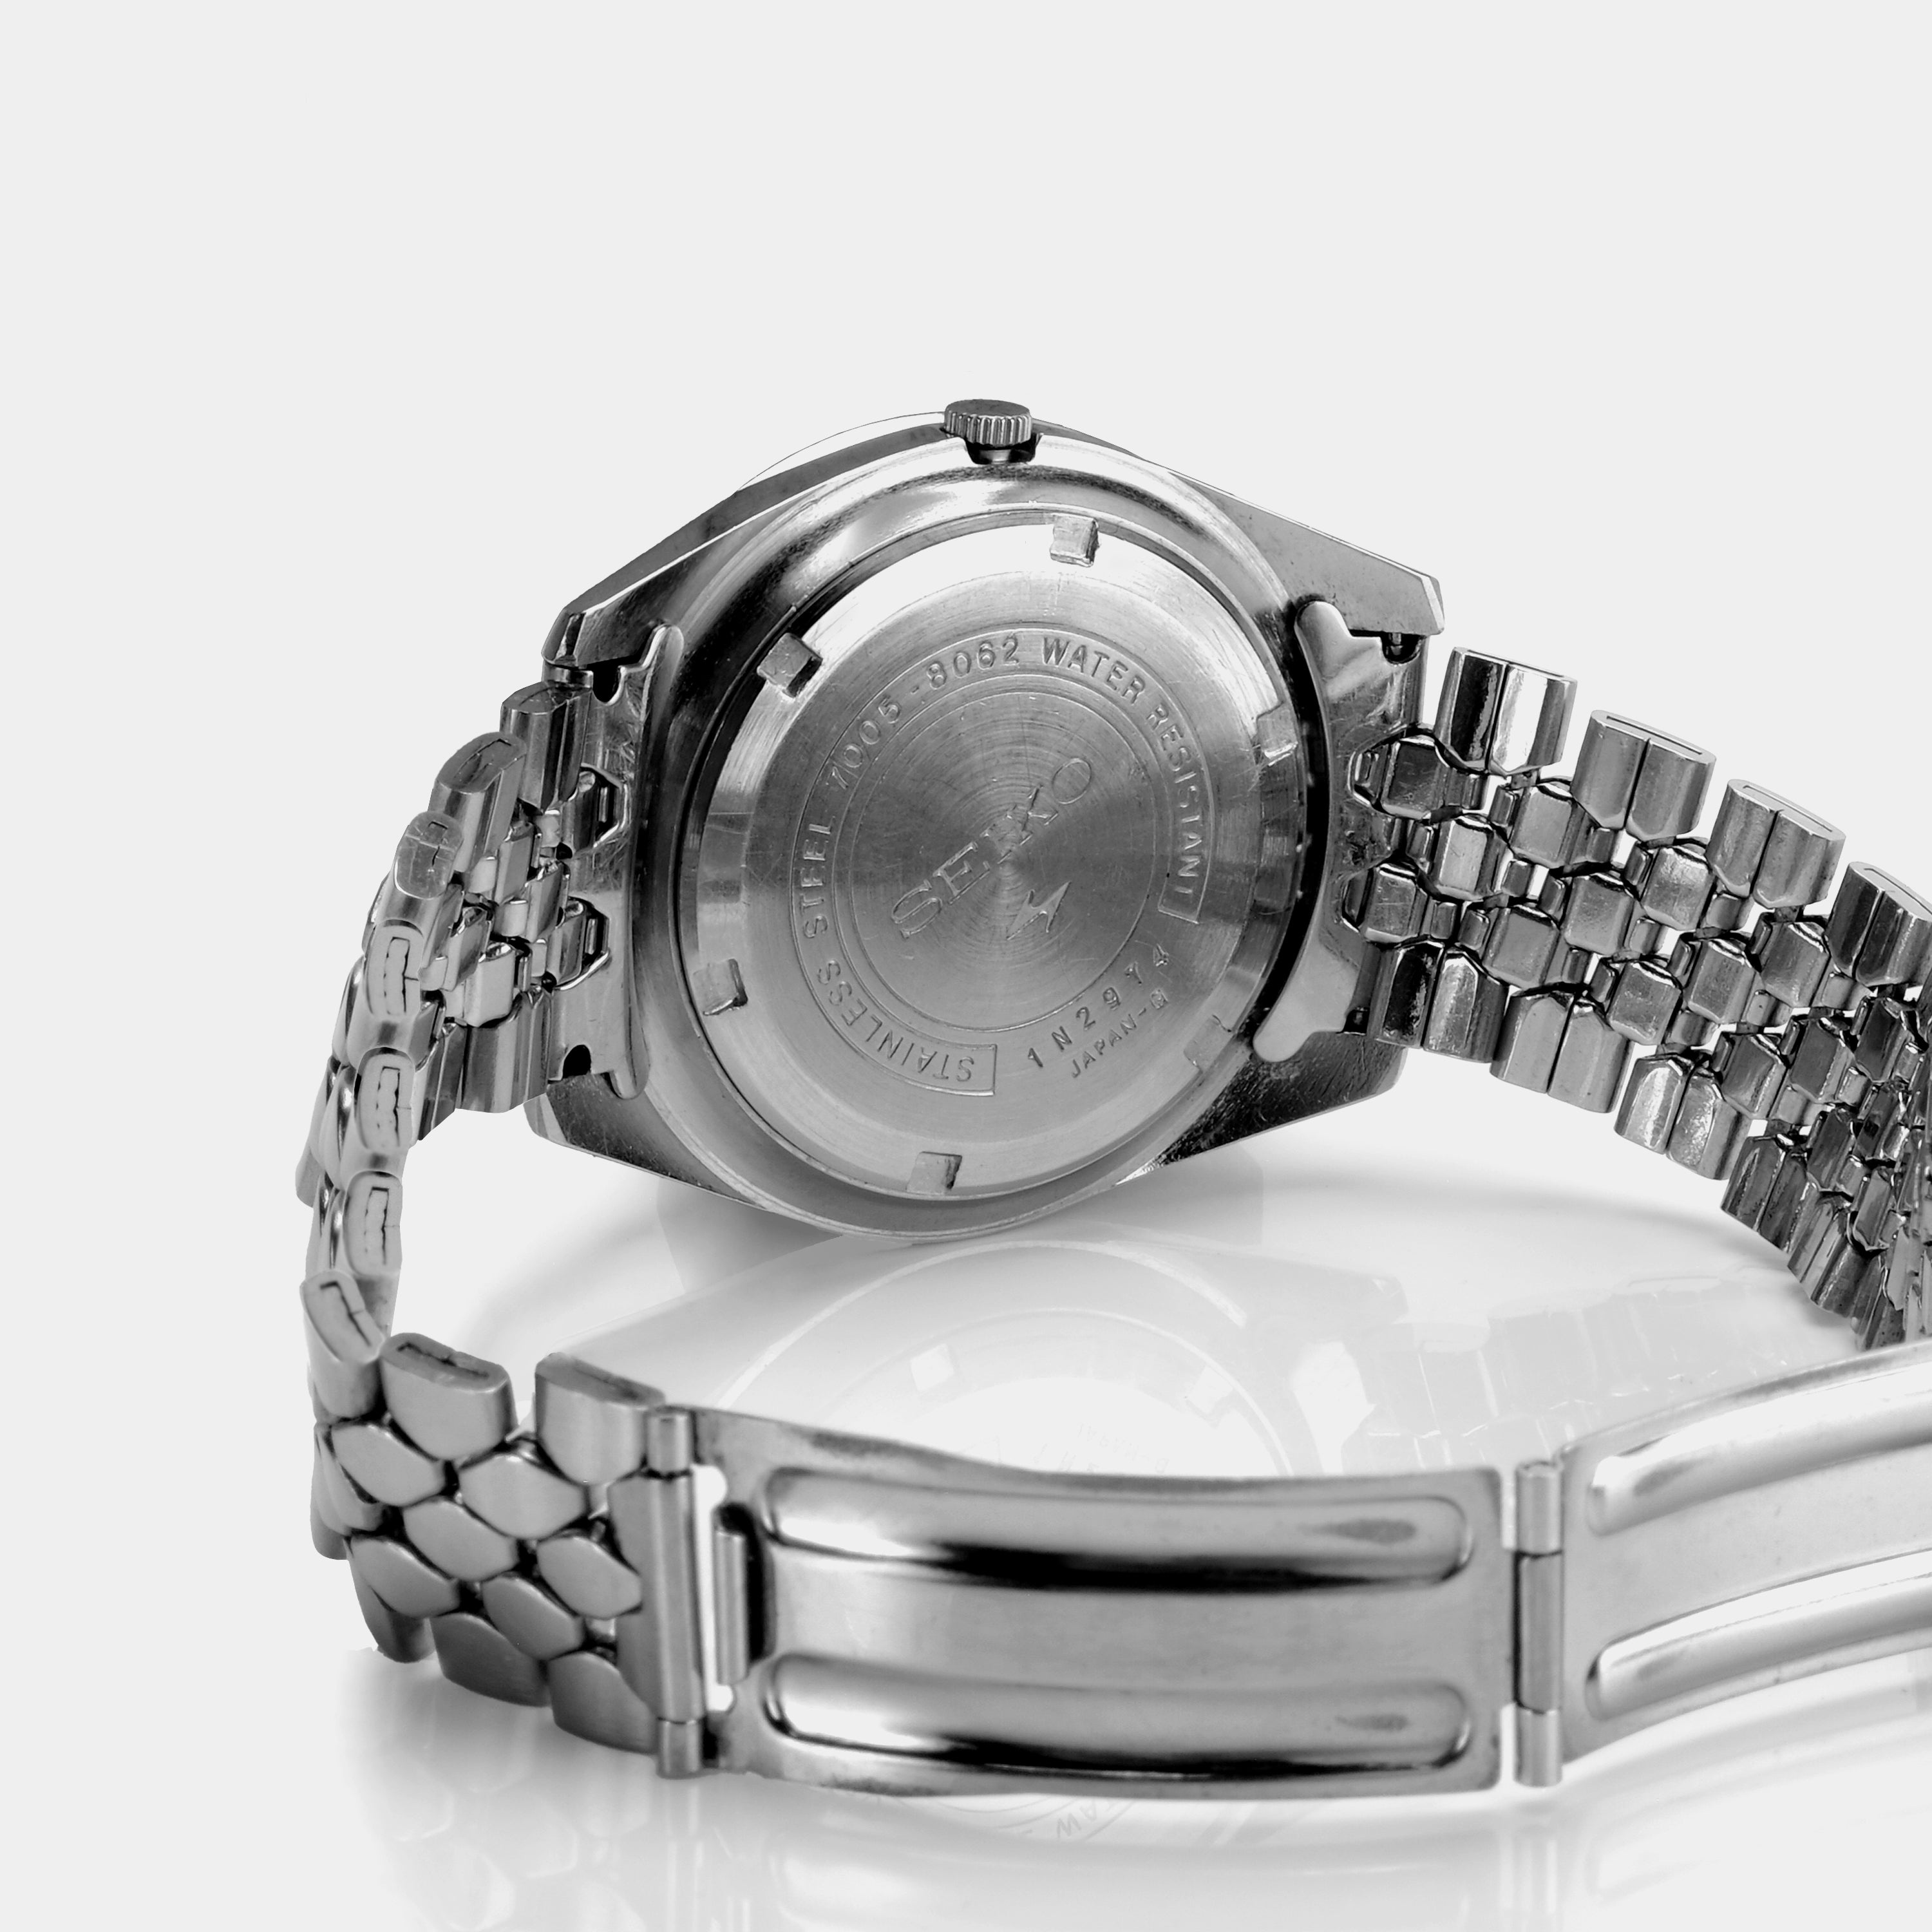 Seiko Jumbo Automatic Date Ref. 7005-8062 Grey Dial Circa 1971 Wristwatch